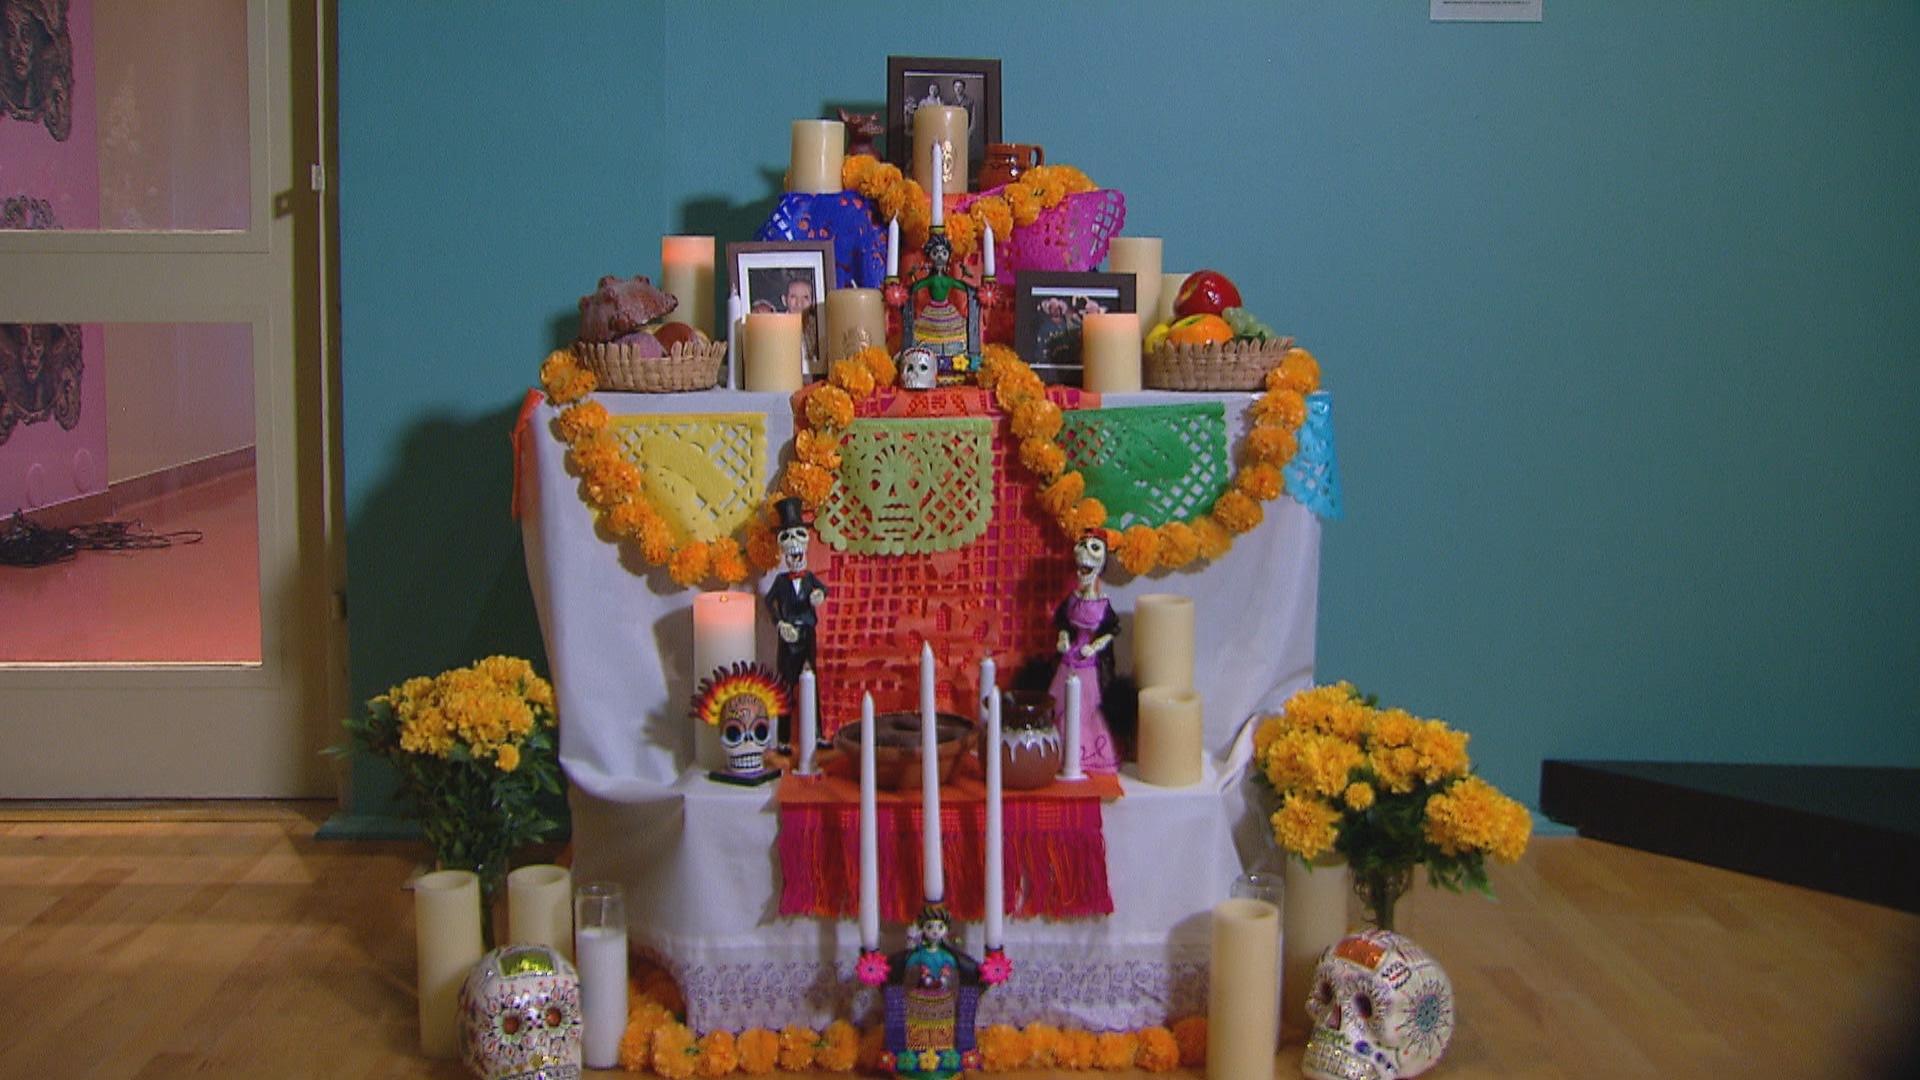 A traditional ofrenda or altar. (Sólo un poco aquí: Day of the Dead, National Museum of Mexican Art)